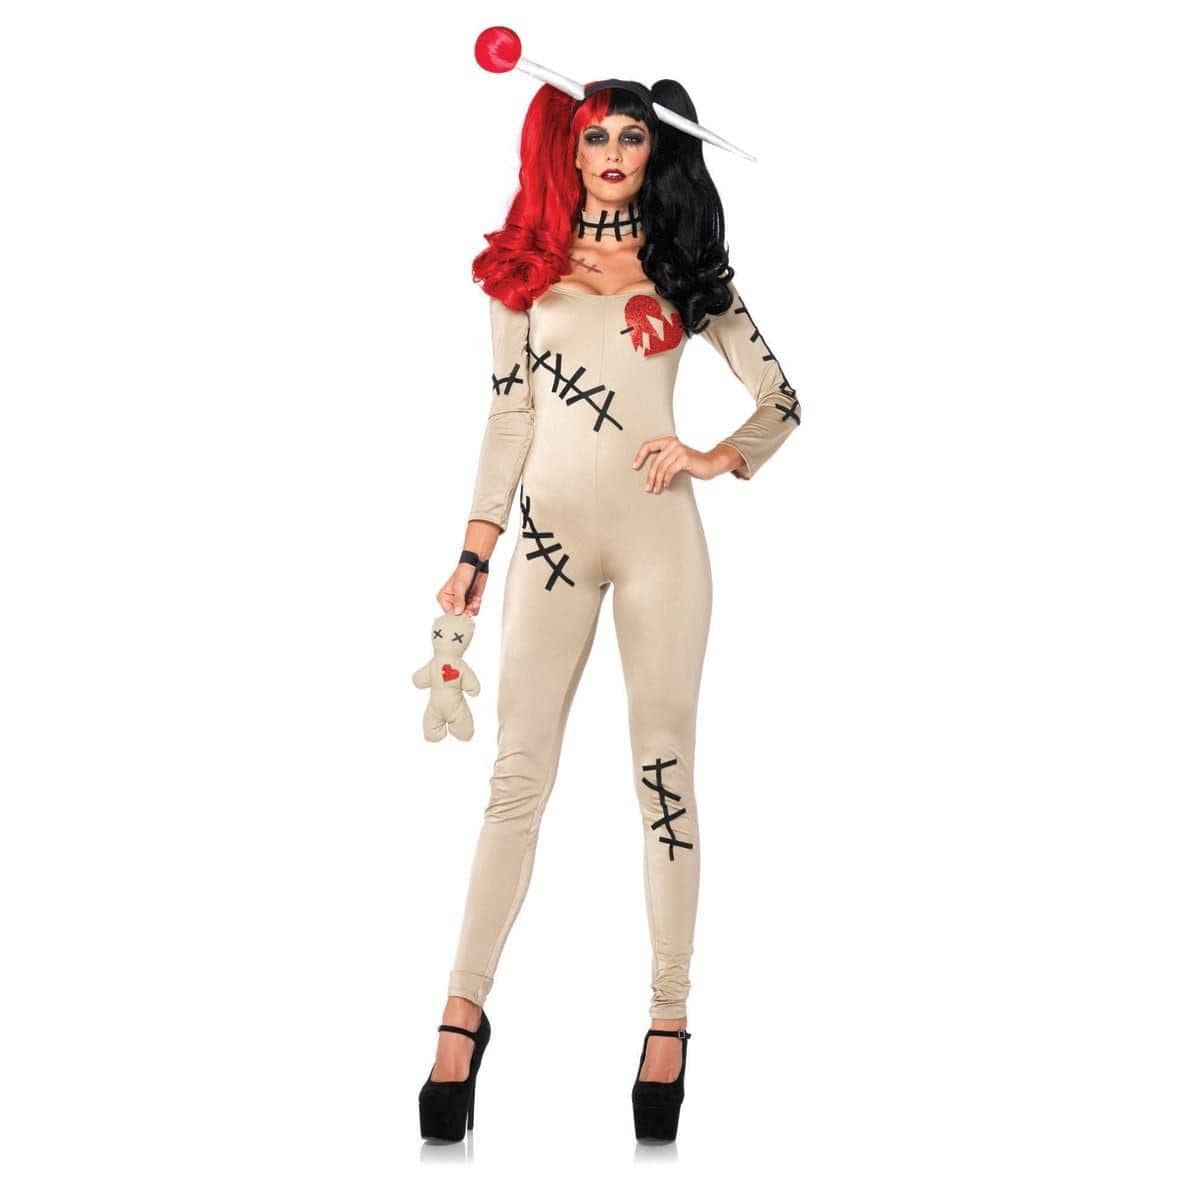 LEG AVENUE/SKU DISTRIBUTORS INC Costumes Voodoo Doll Costume for Adults